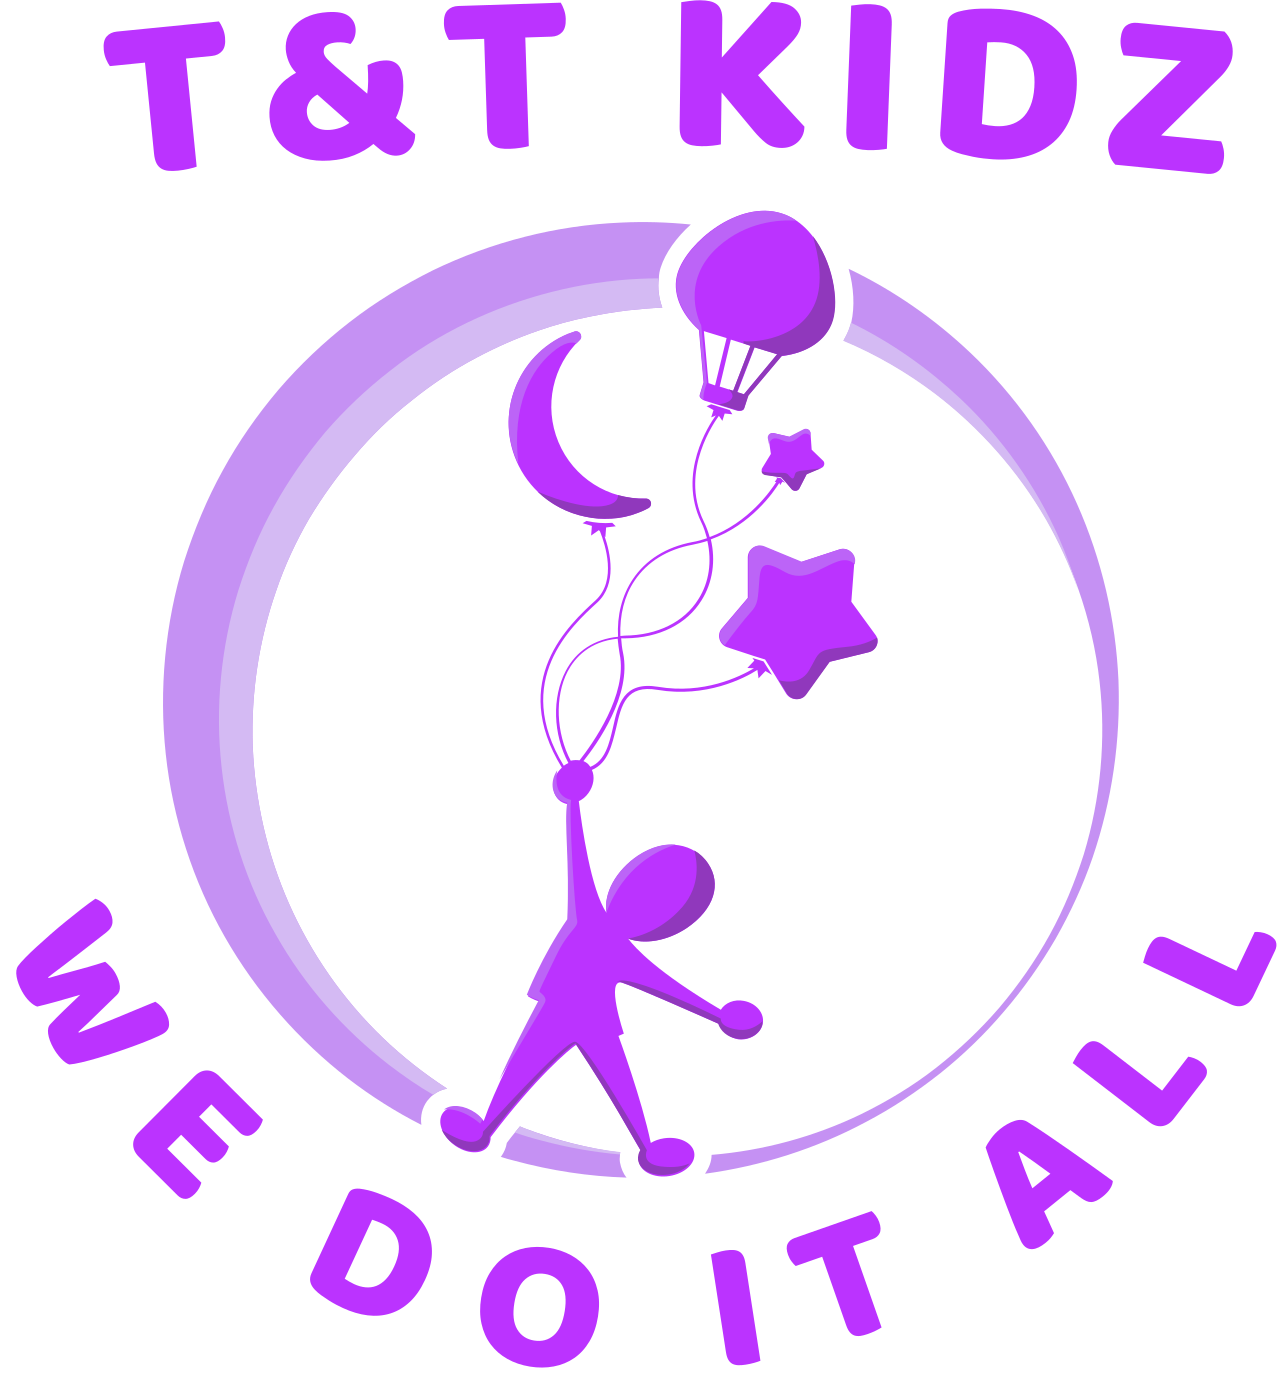 T&T KIDZ's logo